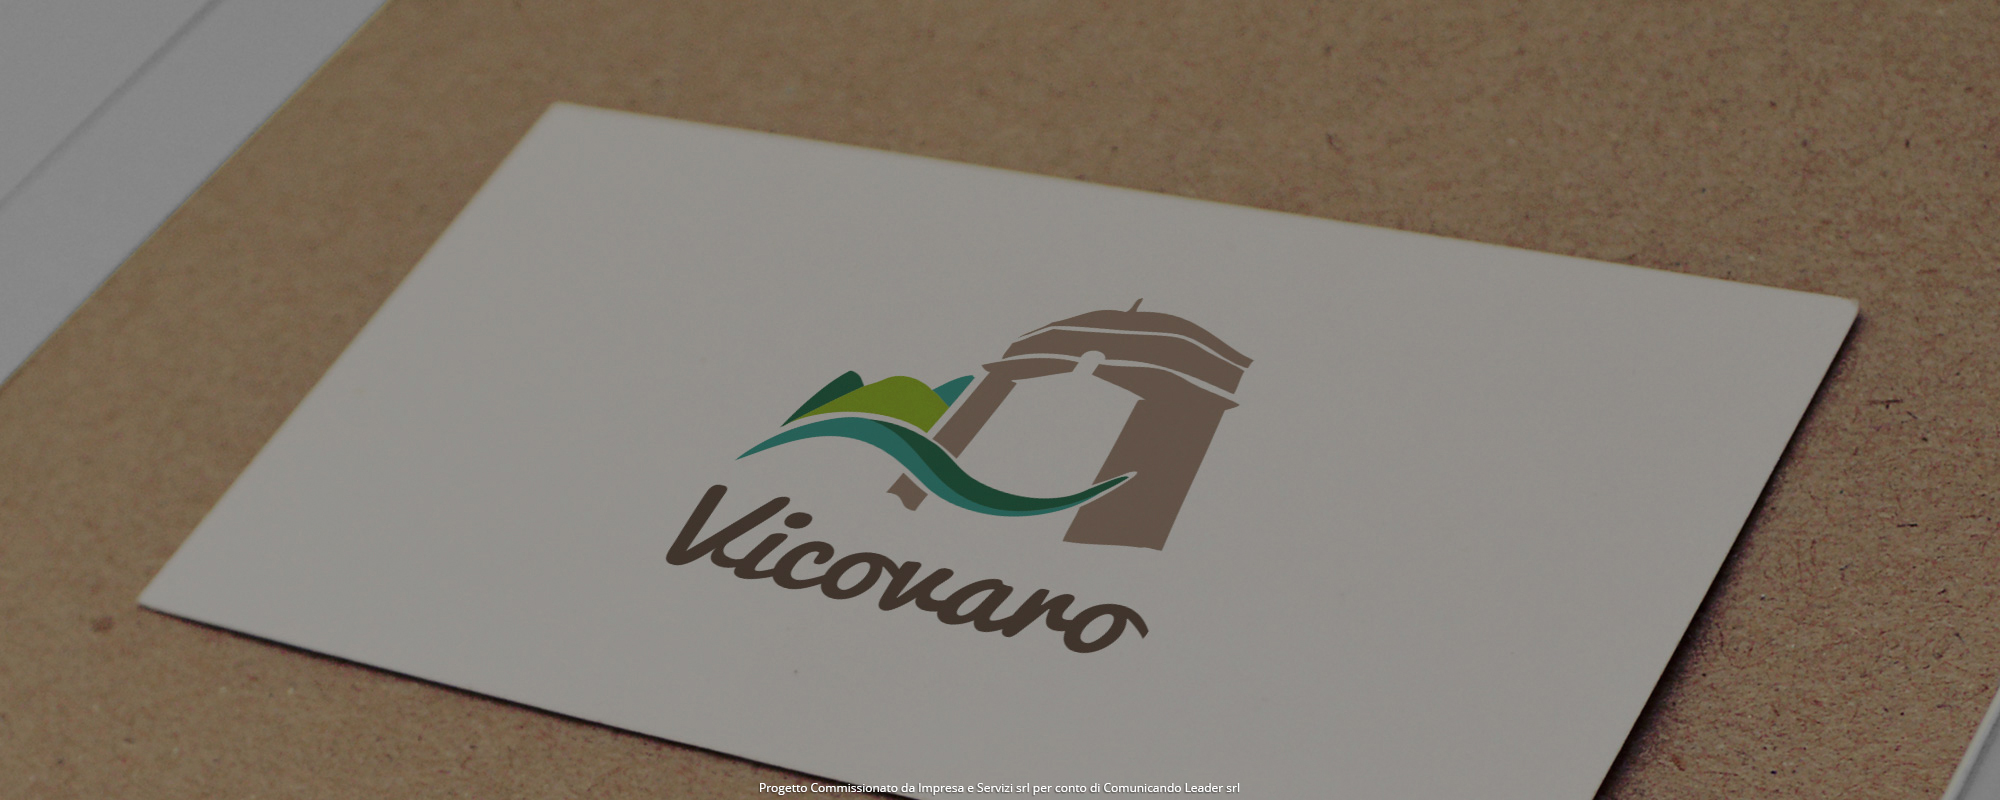 Logo turistico Vicovaro